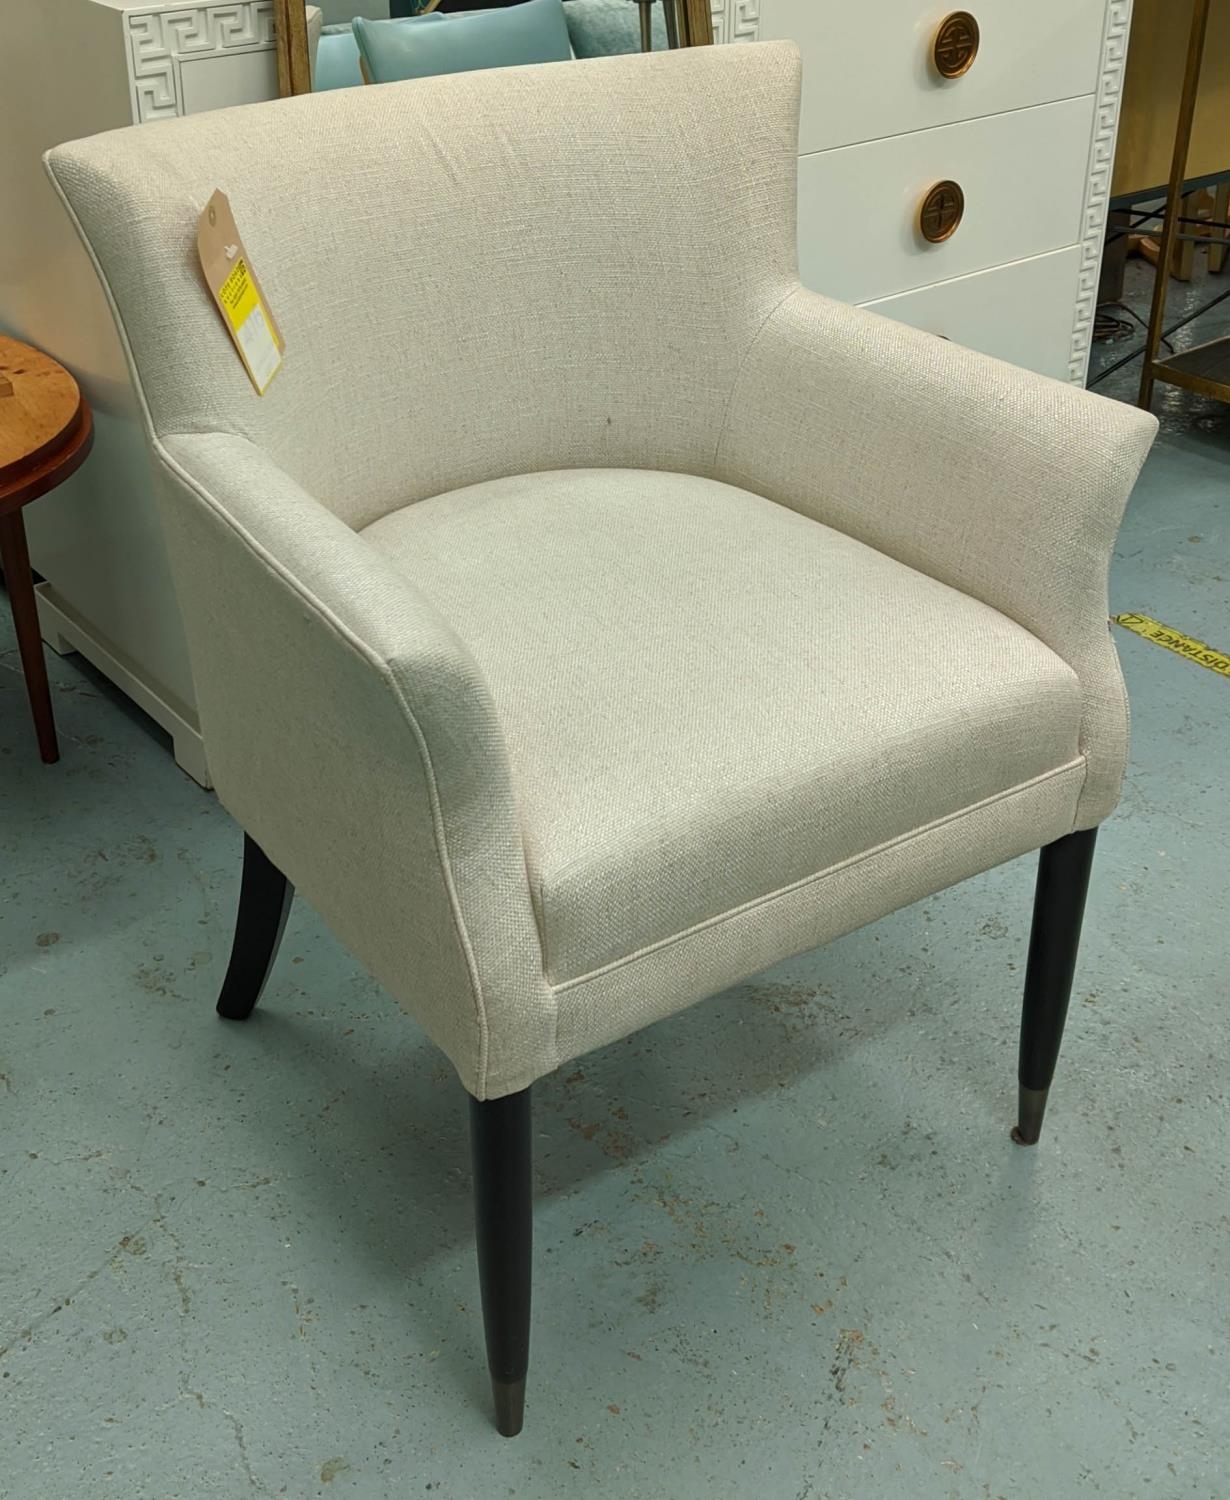 ARMCHAIR, 82cm H, white fabric upholstered, ebonised legs.